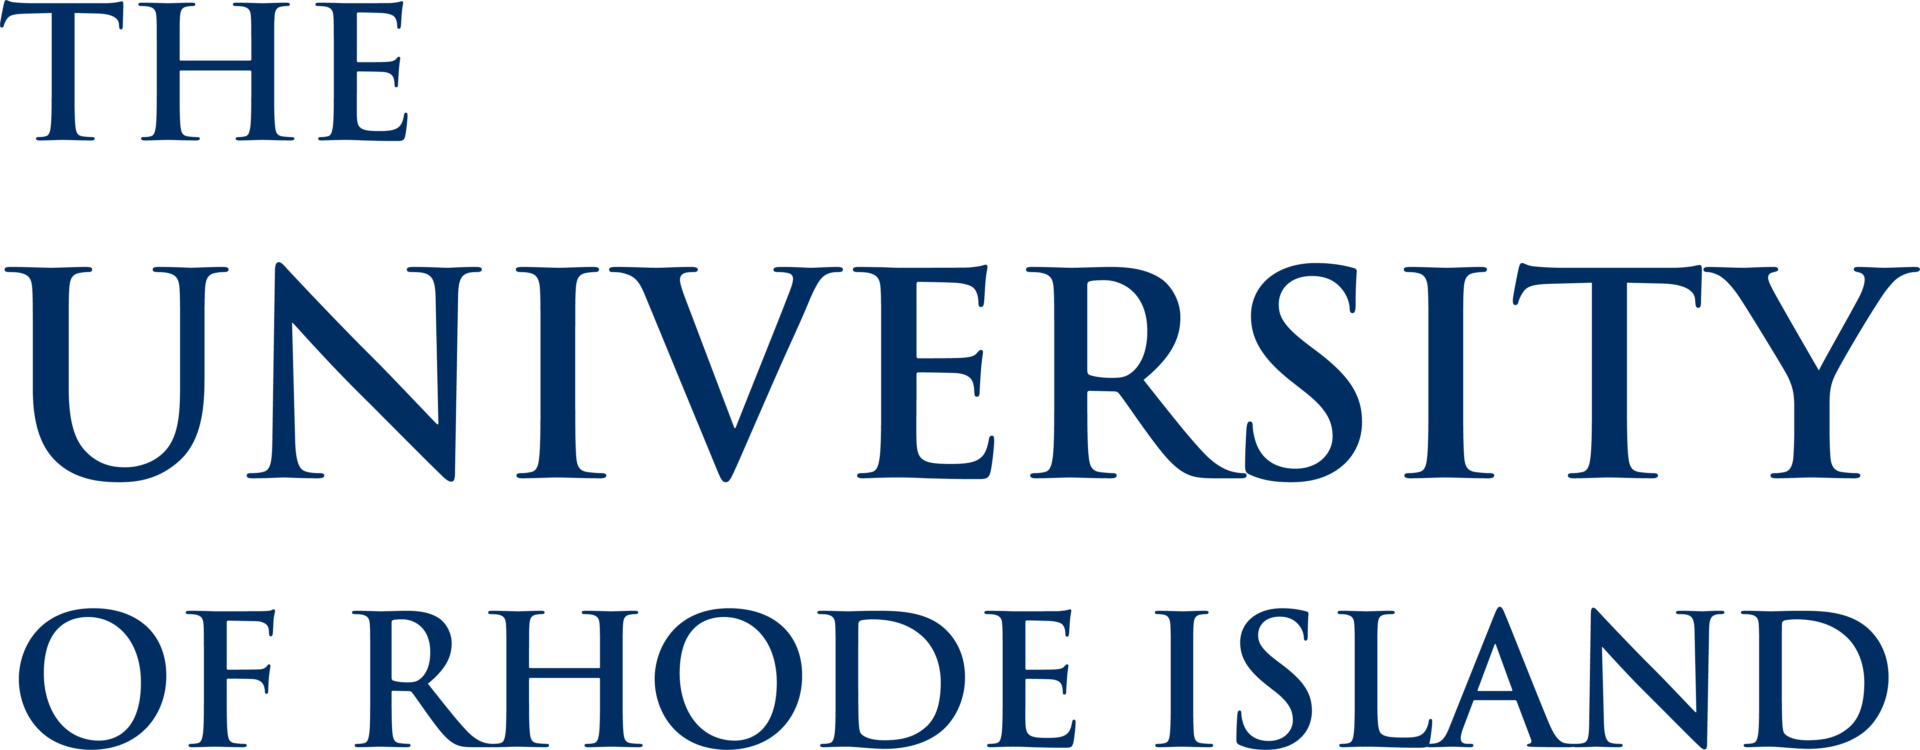 University of Rhode Island's logo.